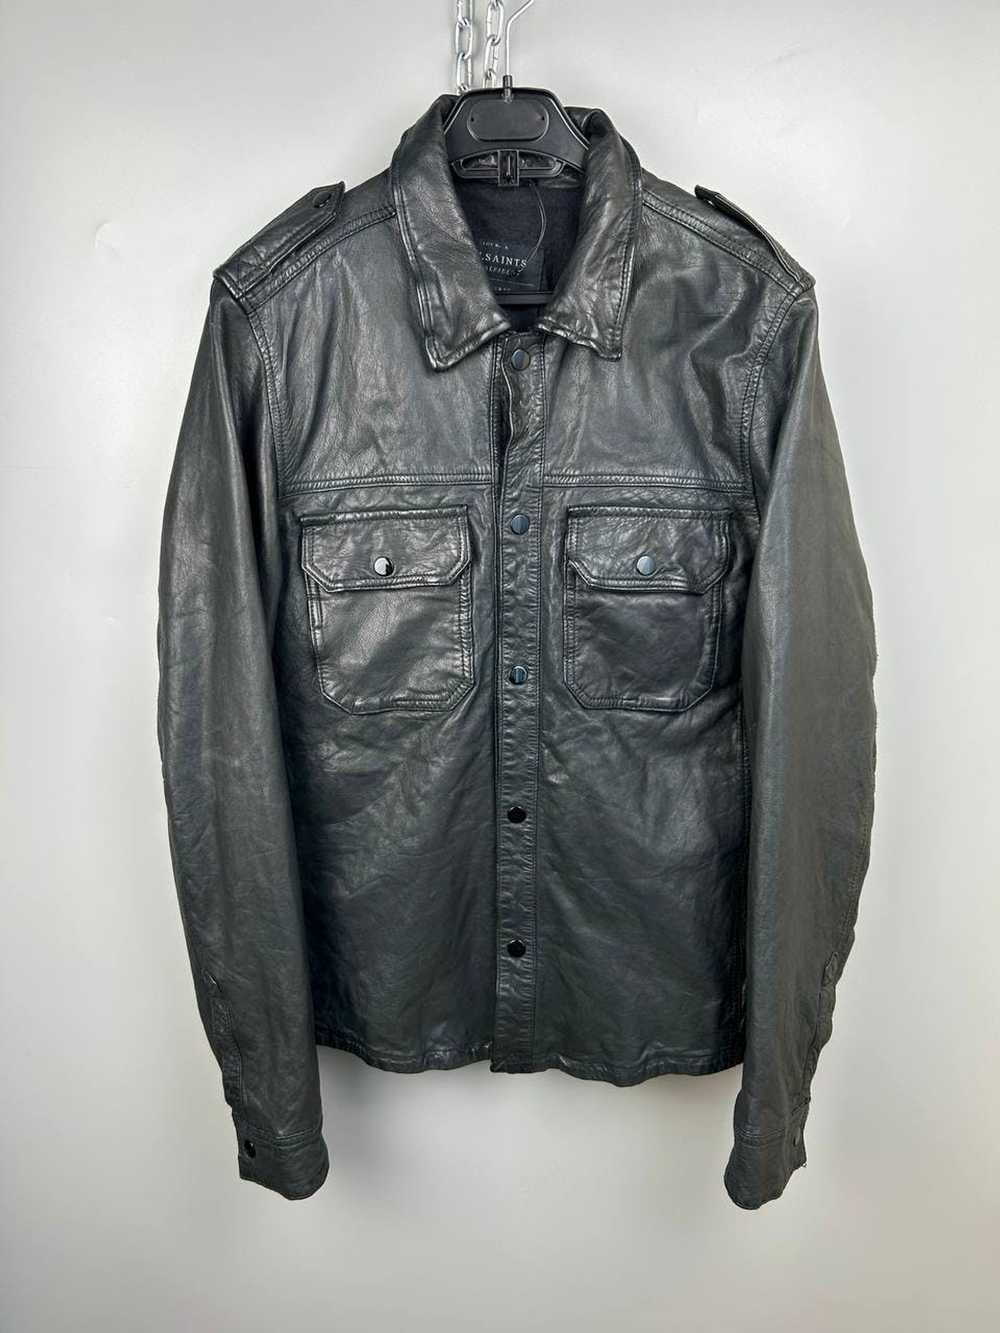 Allsaints Allsaints Spitalfields Leather Jacket - image 1